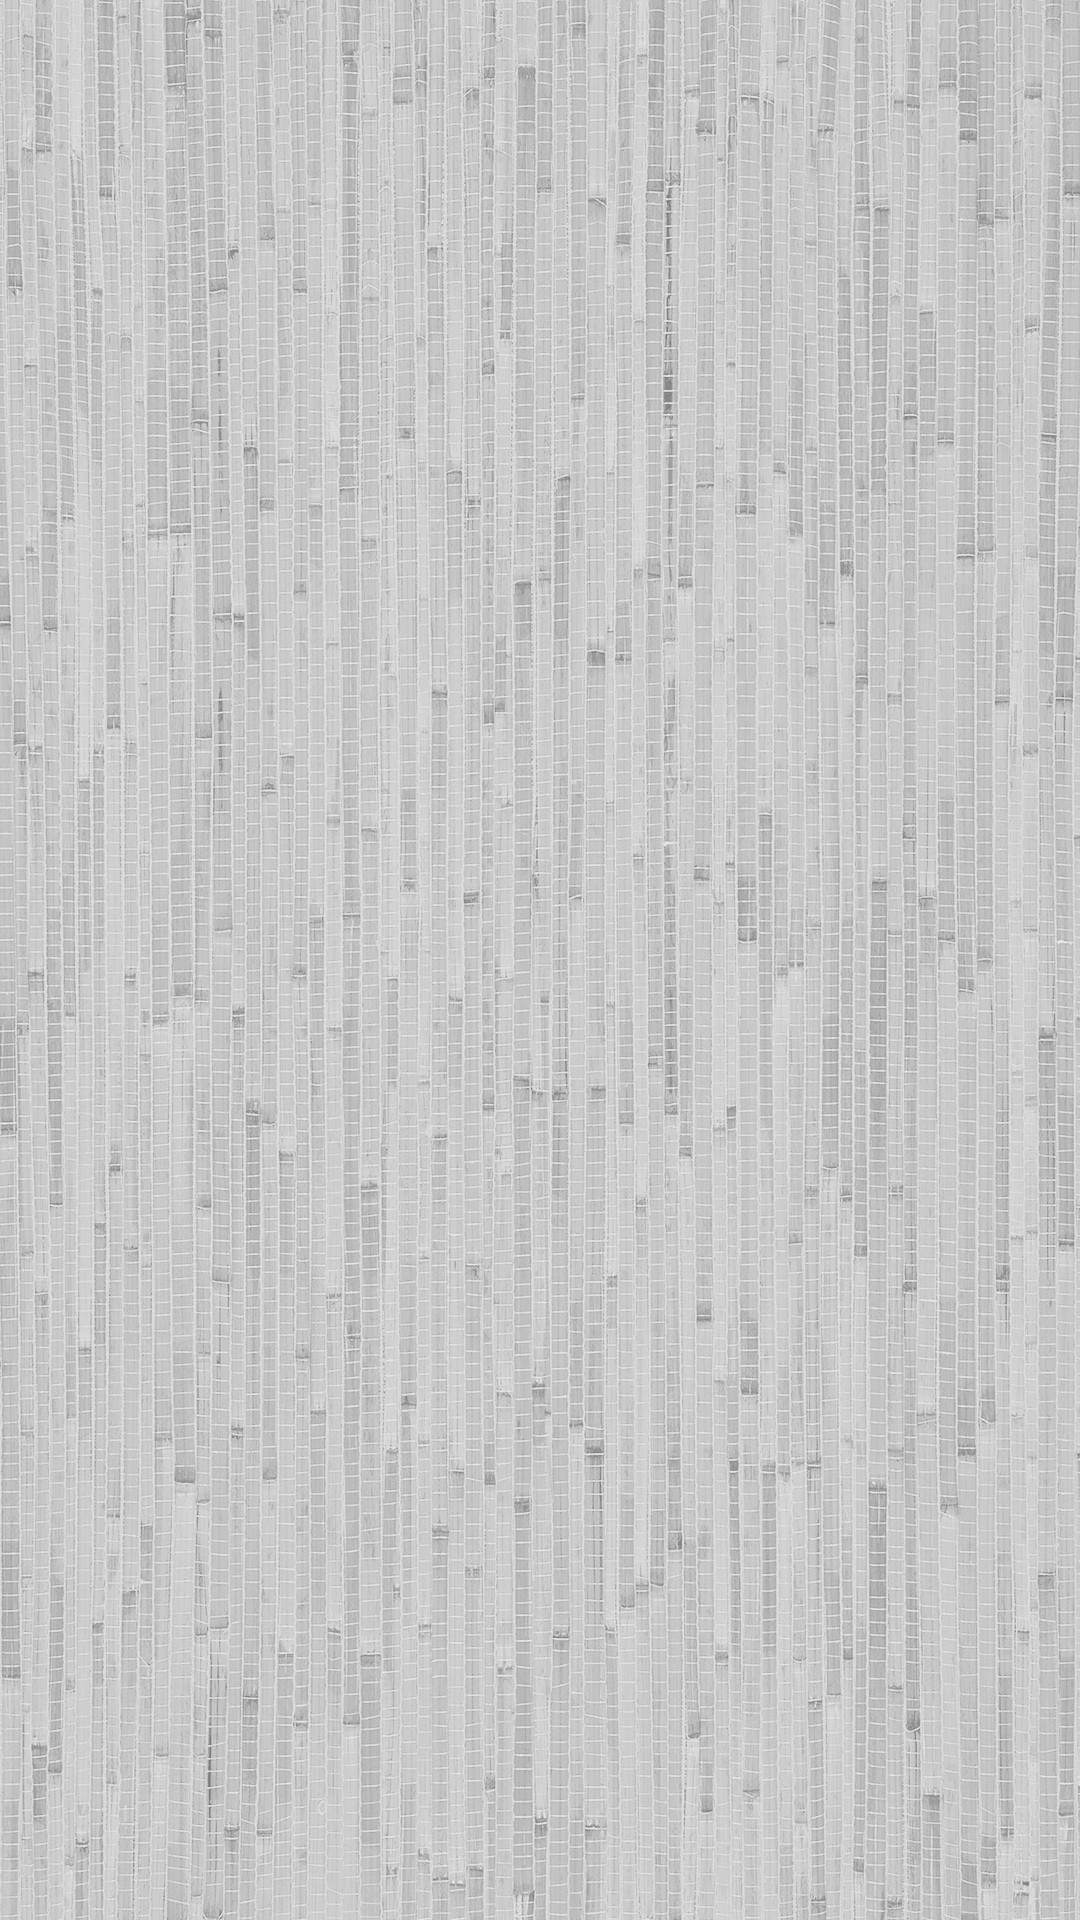 1080x1920 Agraingraypatternrainwood. iPhone 7 Plus Wallpaper